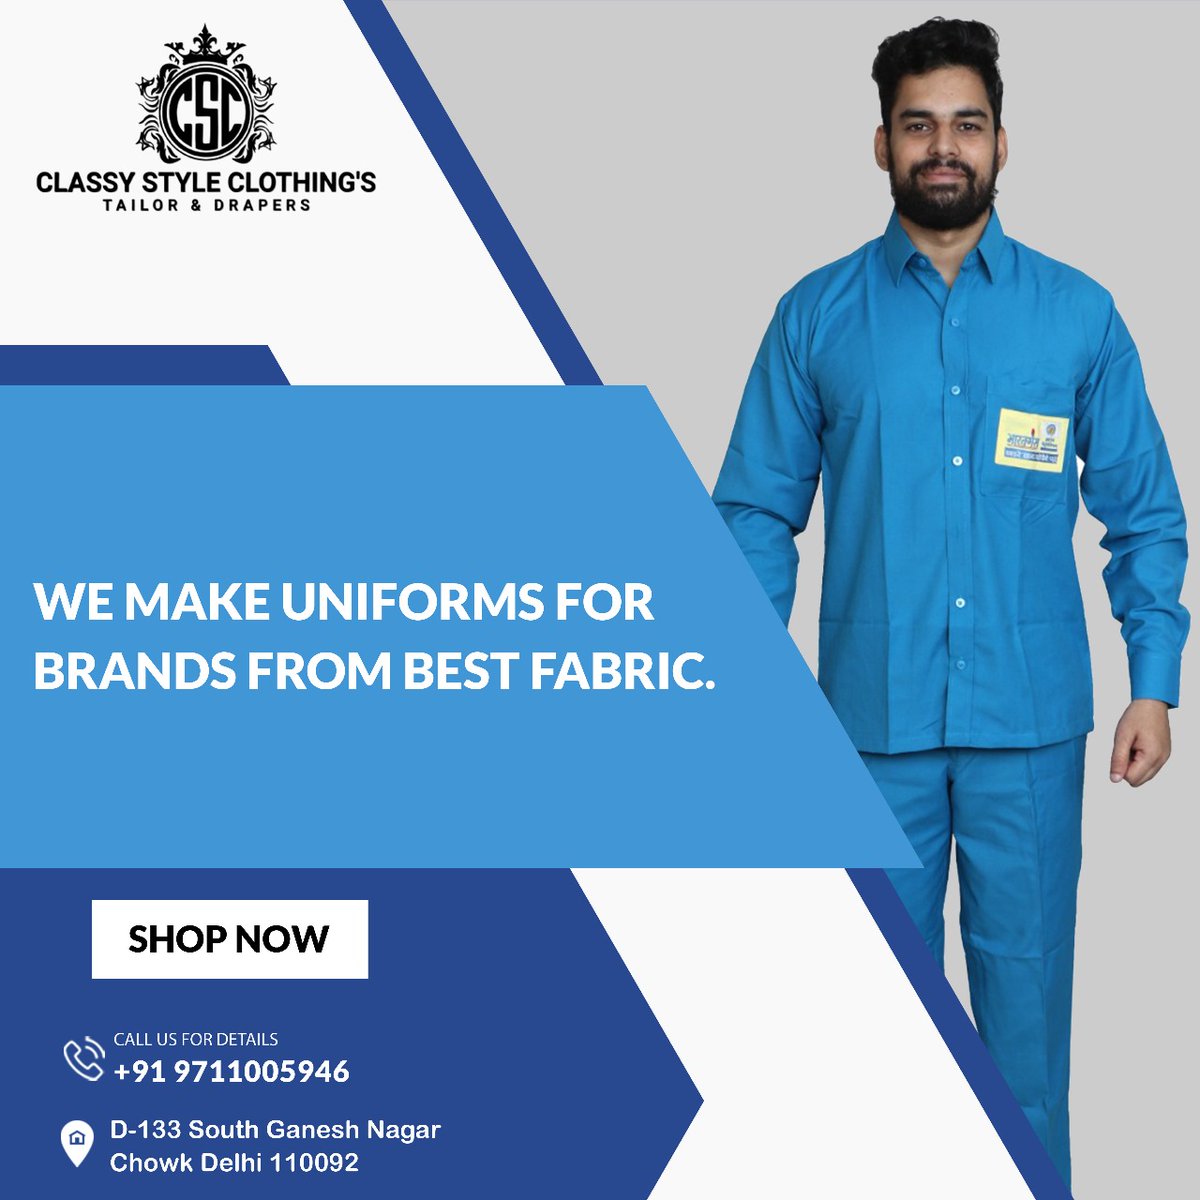 For more details visit:-
☎Call- +91 9711005946
📨Email-classystyleclothings@gmail.com
🌎visit - D-133 South ganesh nagar chowk Delhi 110092

#UniformsByDesign #QualityUniforms #BrandedApparel #FabricPerfection #CustomUniforms #TopNotchBrands #HighQualityFabrics